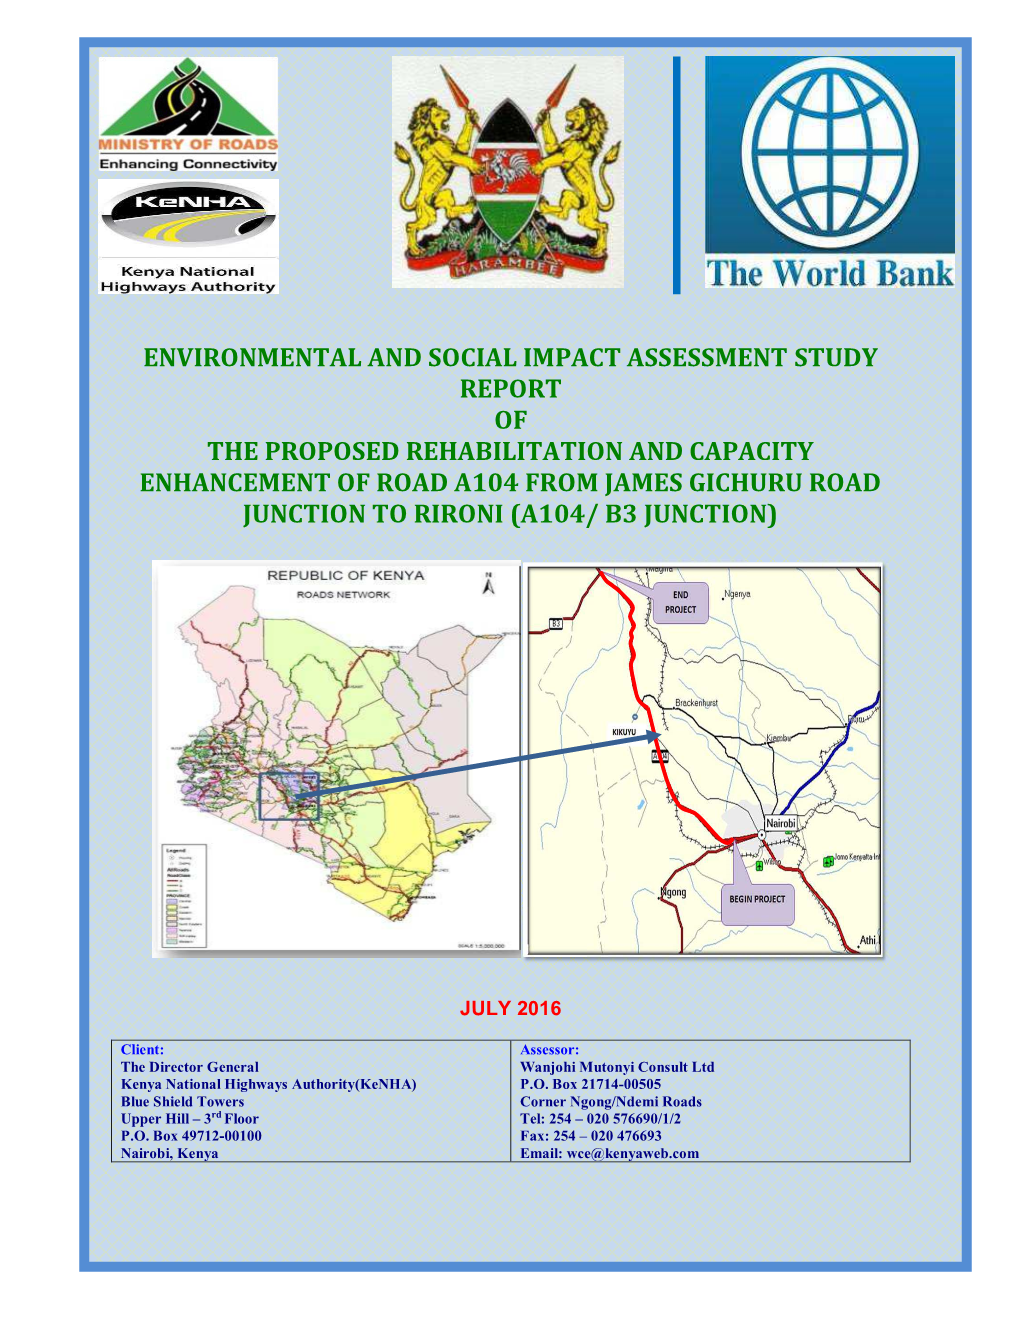 ESIA Study for James Gichuru-Rironi Road